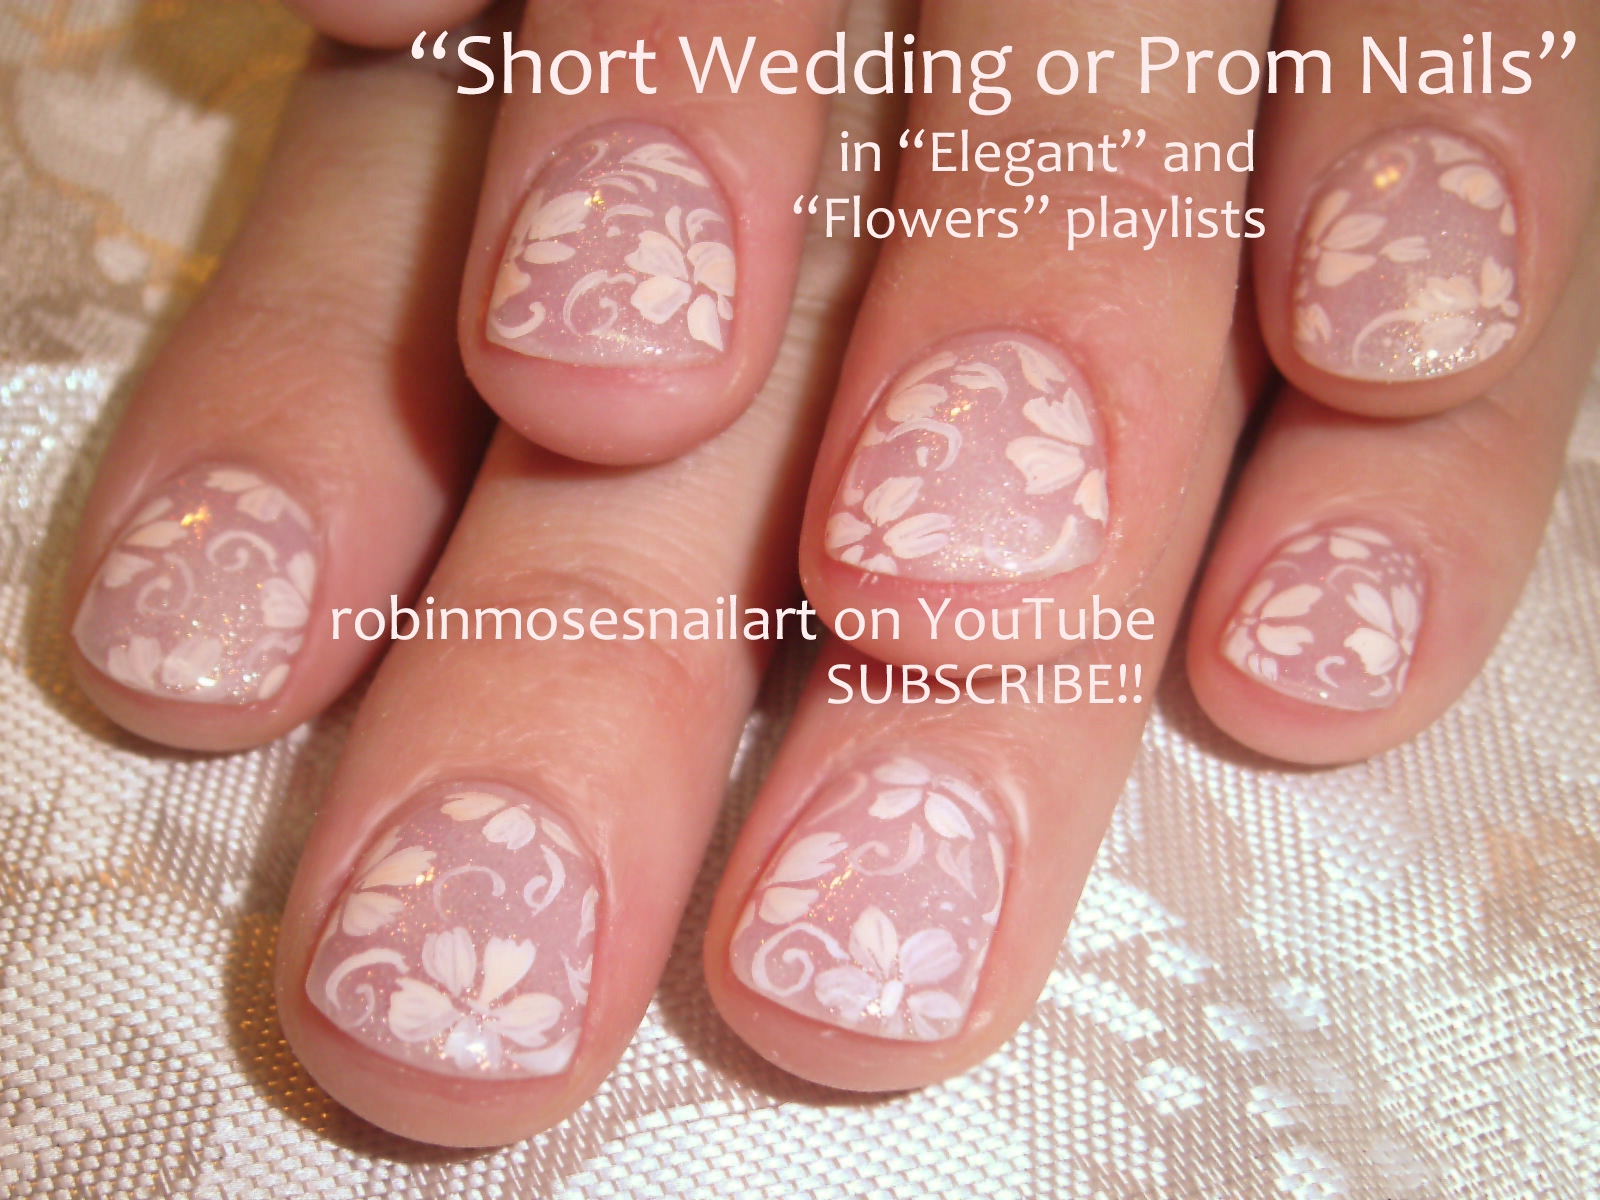 2. "Romantic Lace Wedding Nail Design" - wide 5